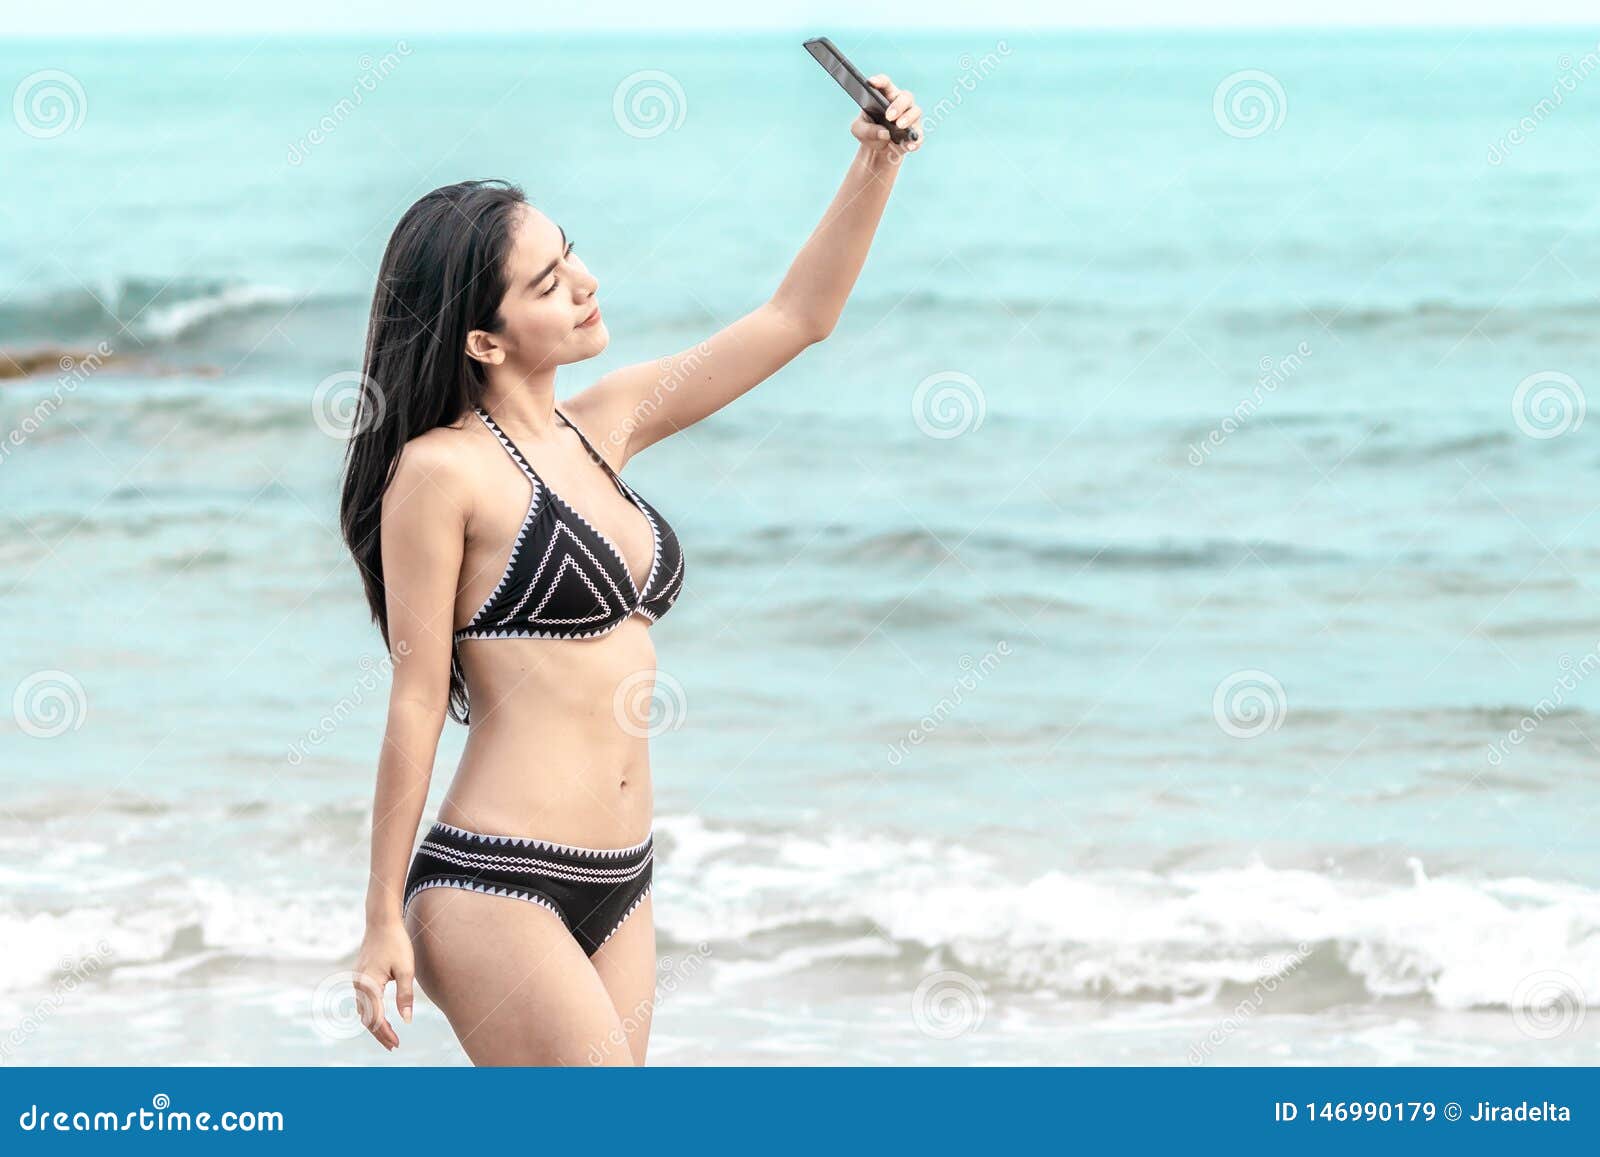 beach tease selfie